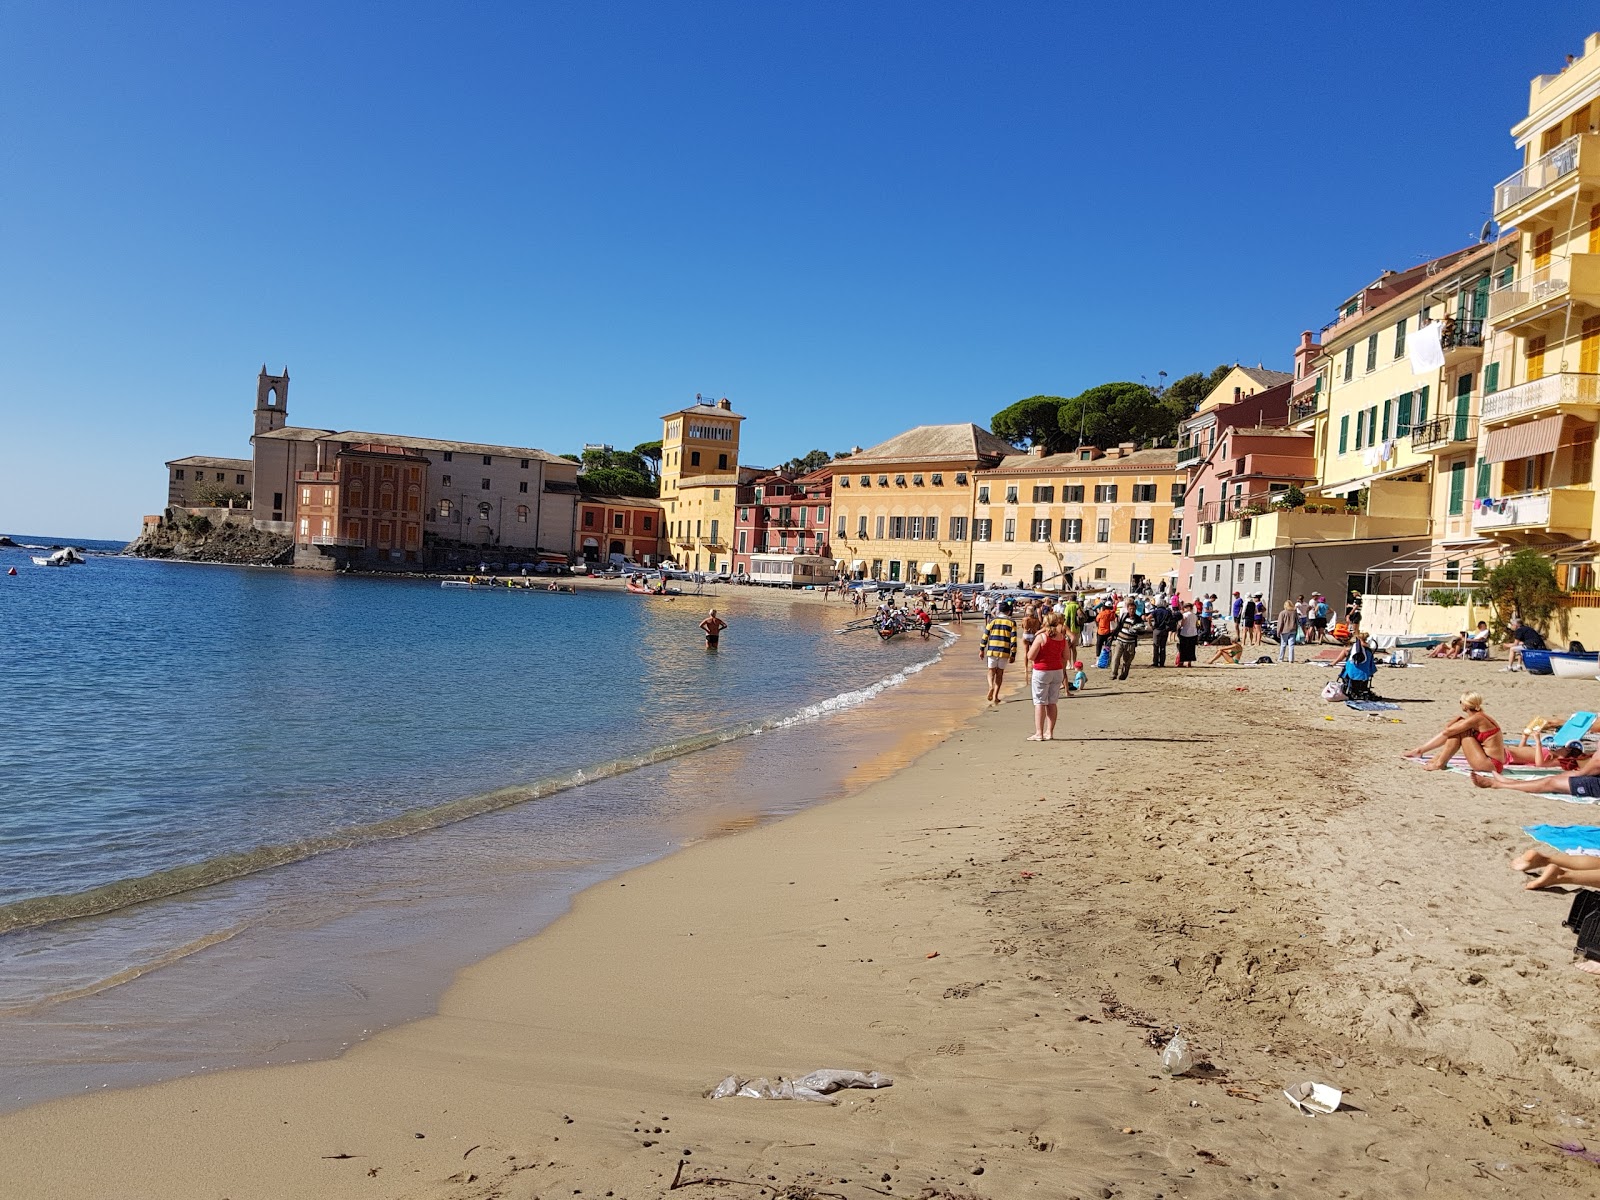 Foto van Spiaggia Baia del Silenzio met gemiddeld niveau van netheid